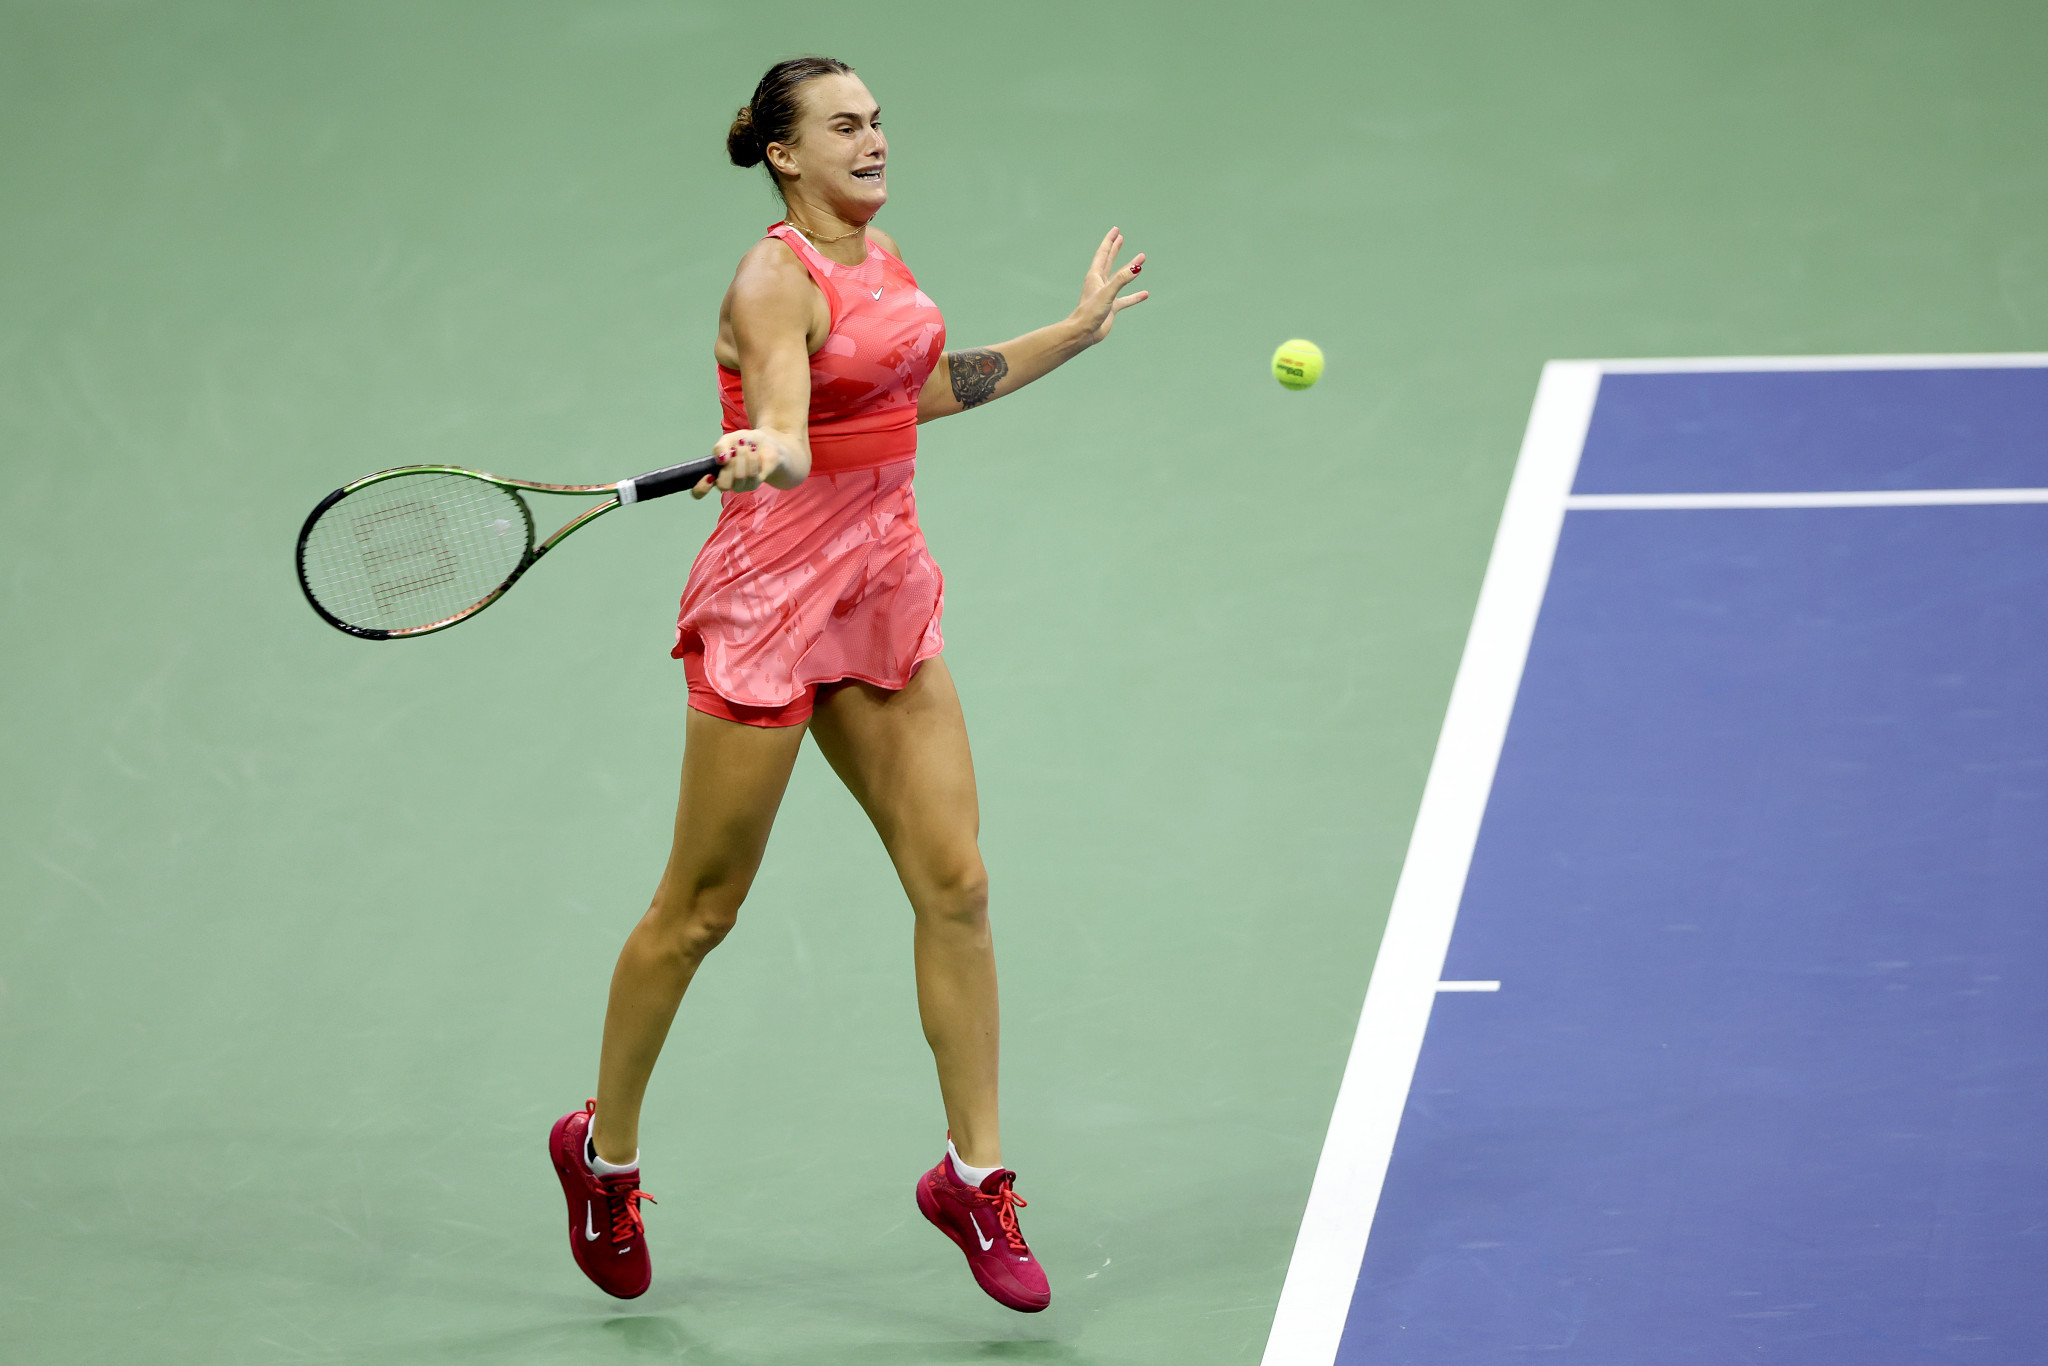 Women's tennis set to return to China for first major event since lifting Peng Shuai ban